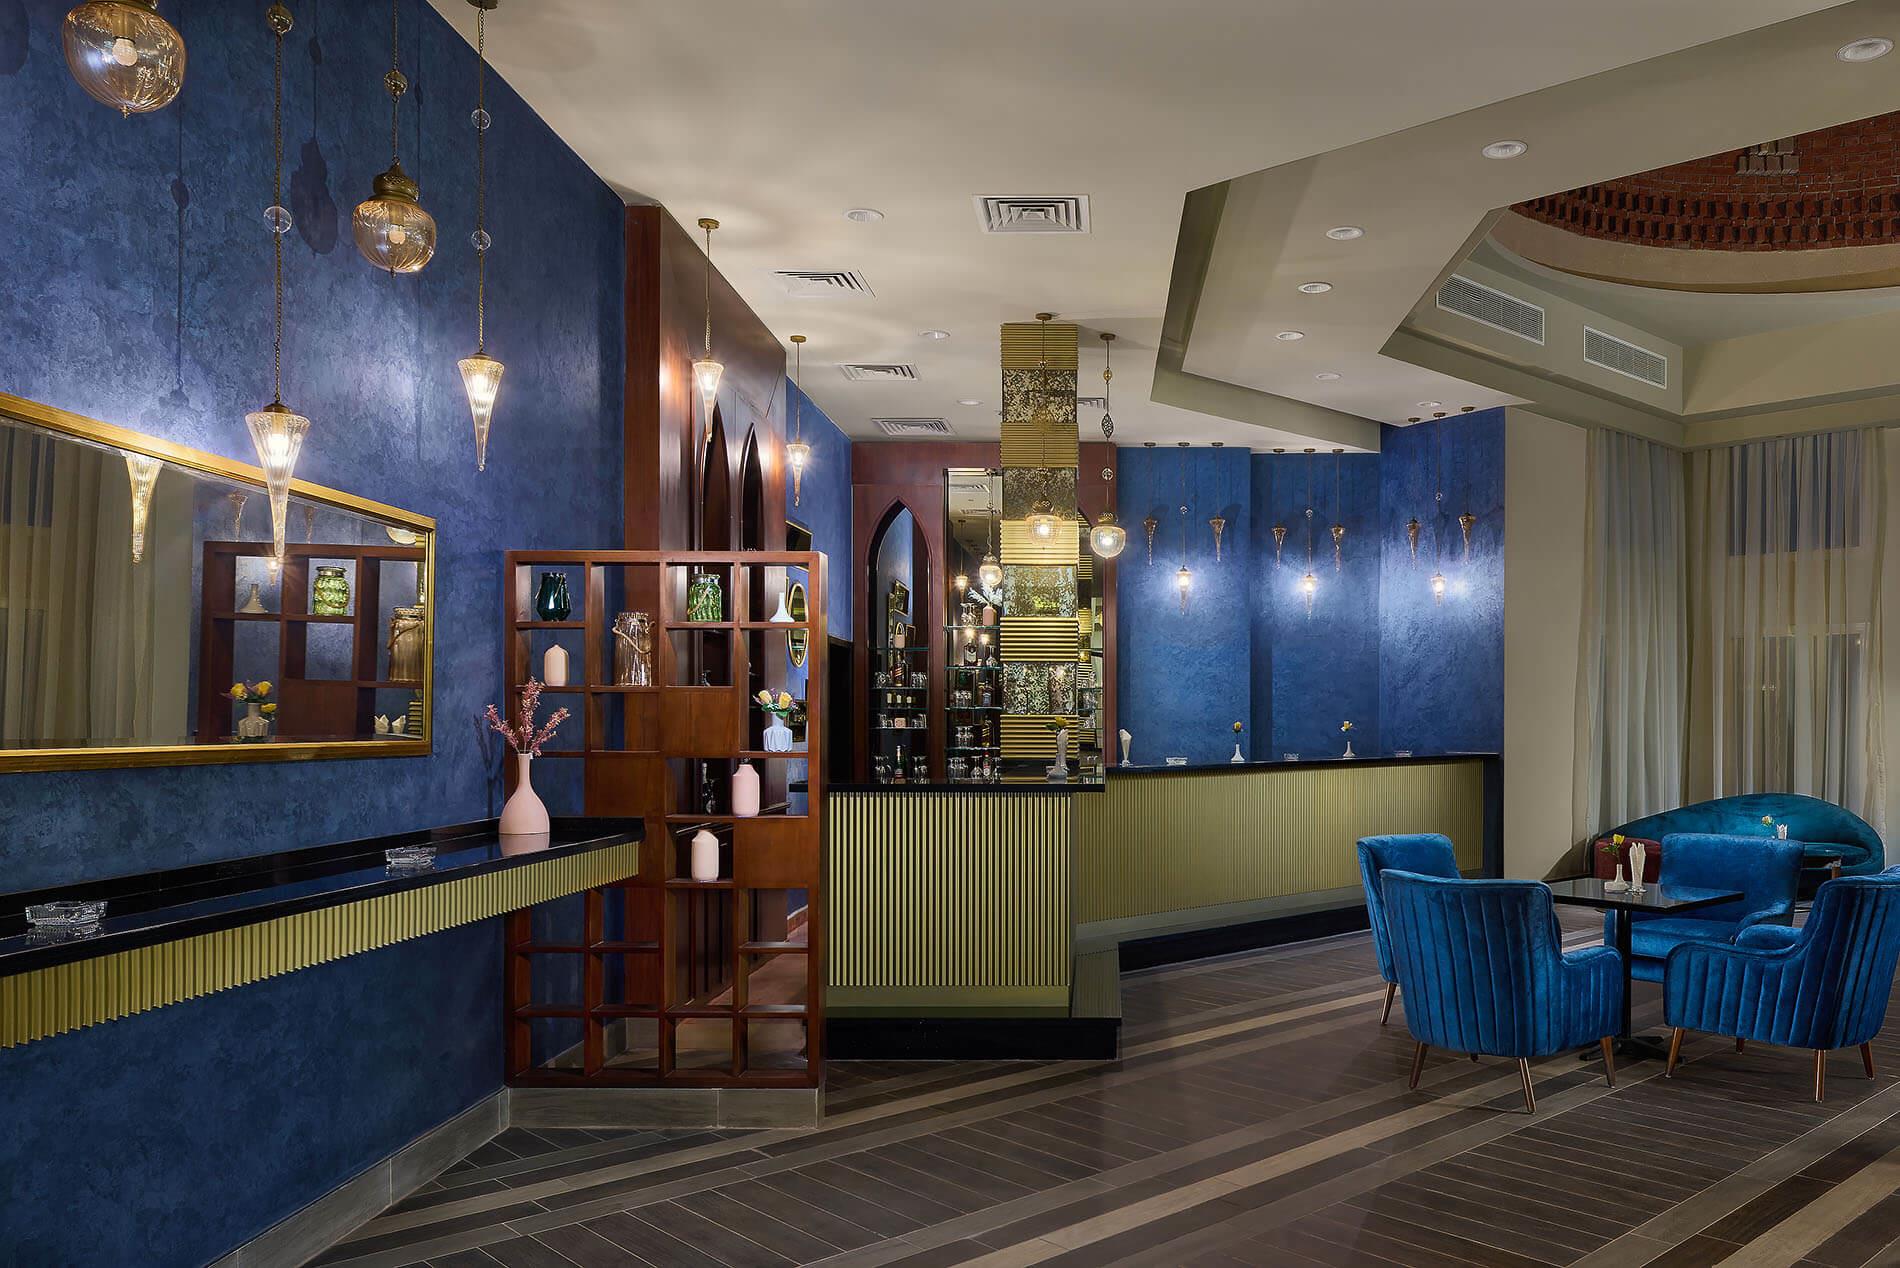 Lazuli Hotel Marsa Alam 5*